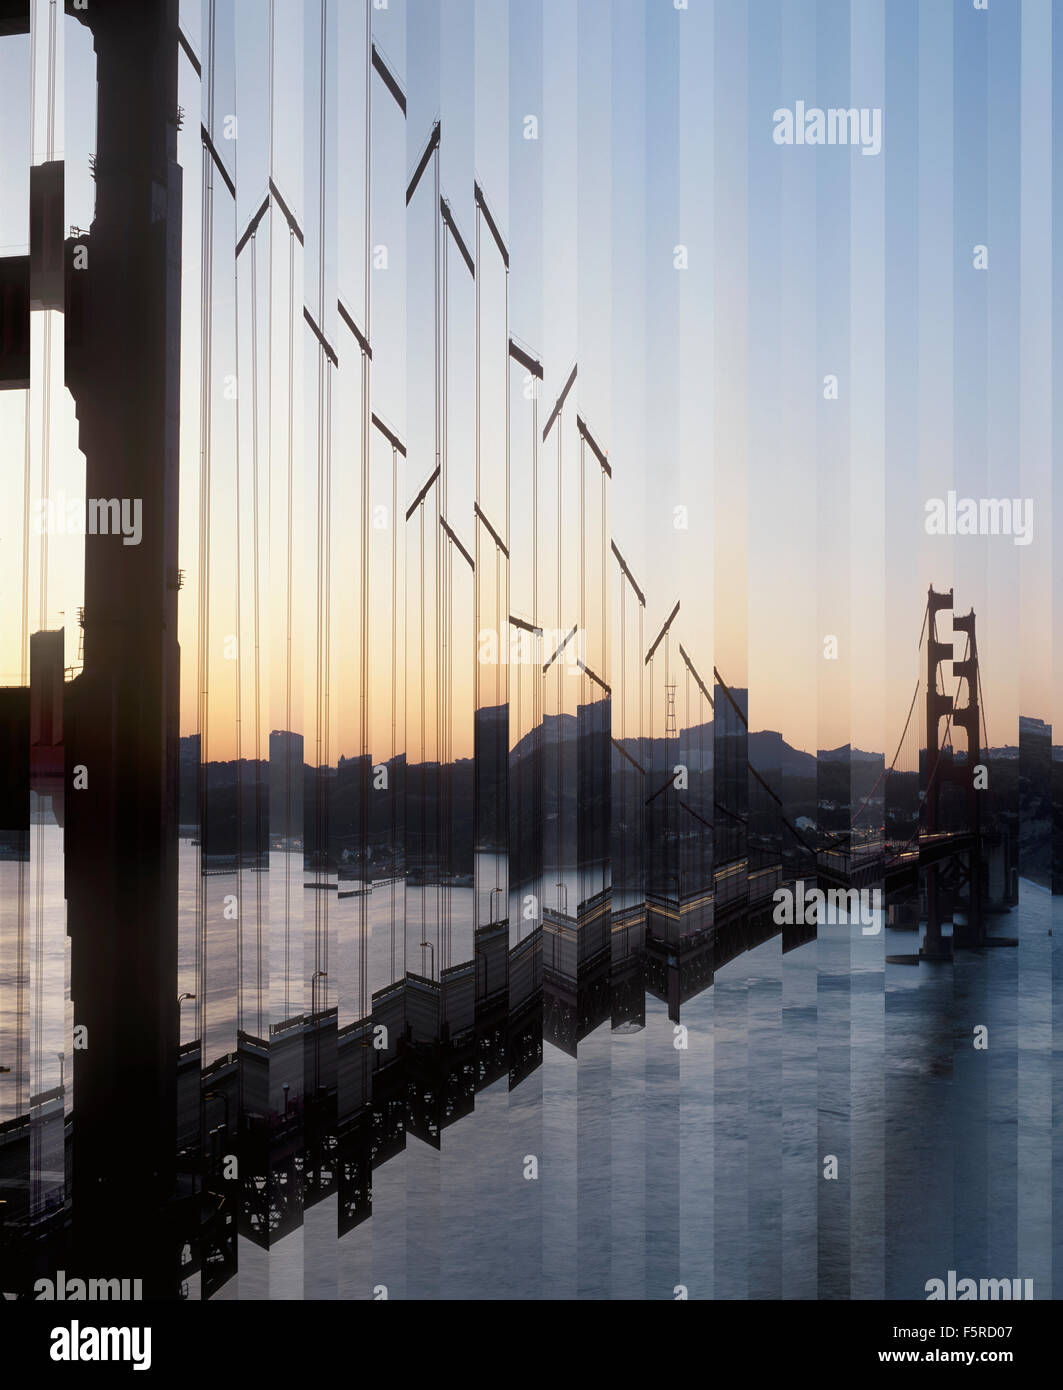 Golden Gate Bridge Viewed Through Distorted Glass Stock Photo